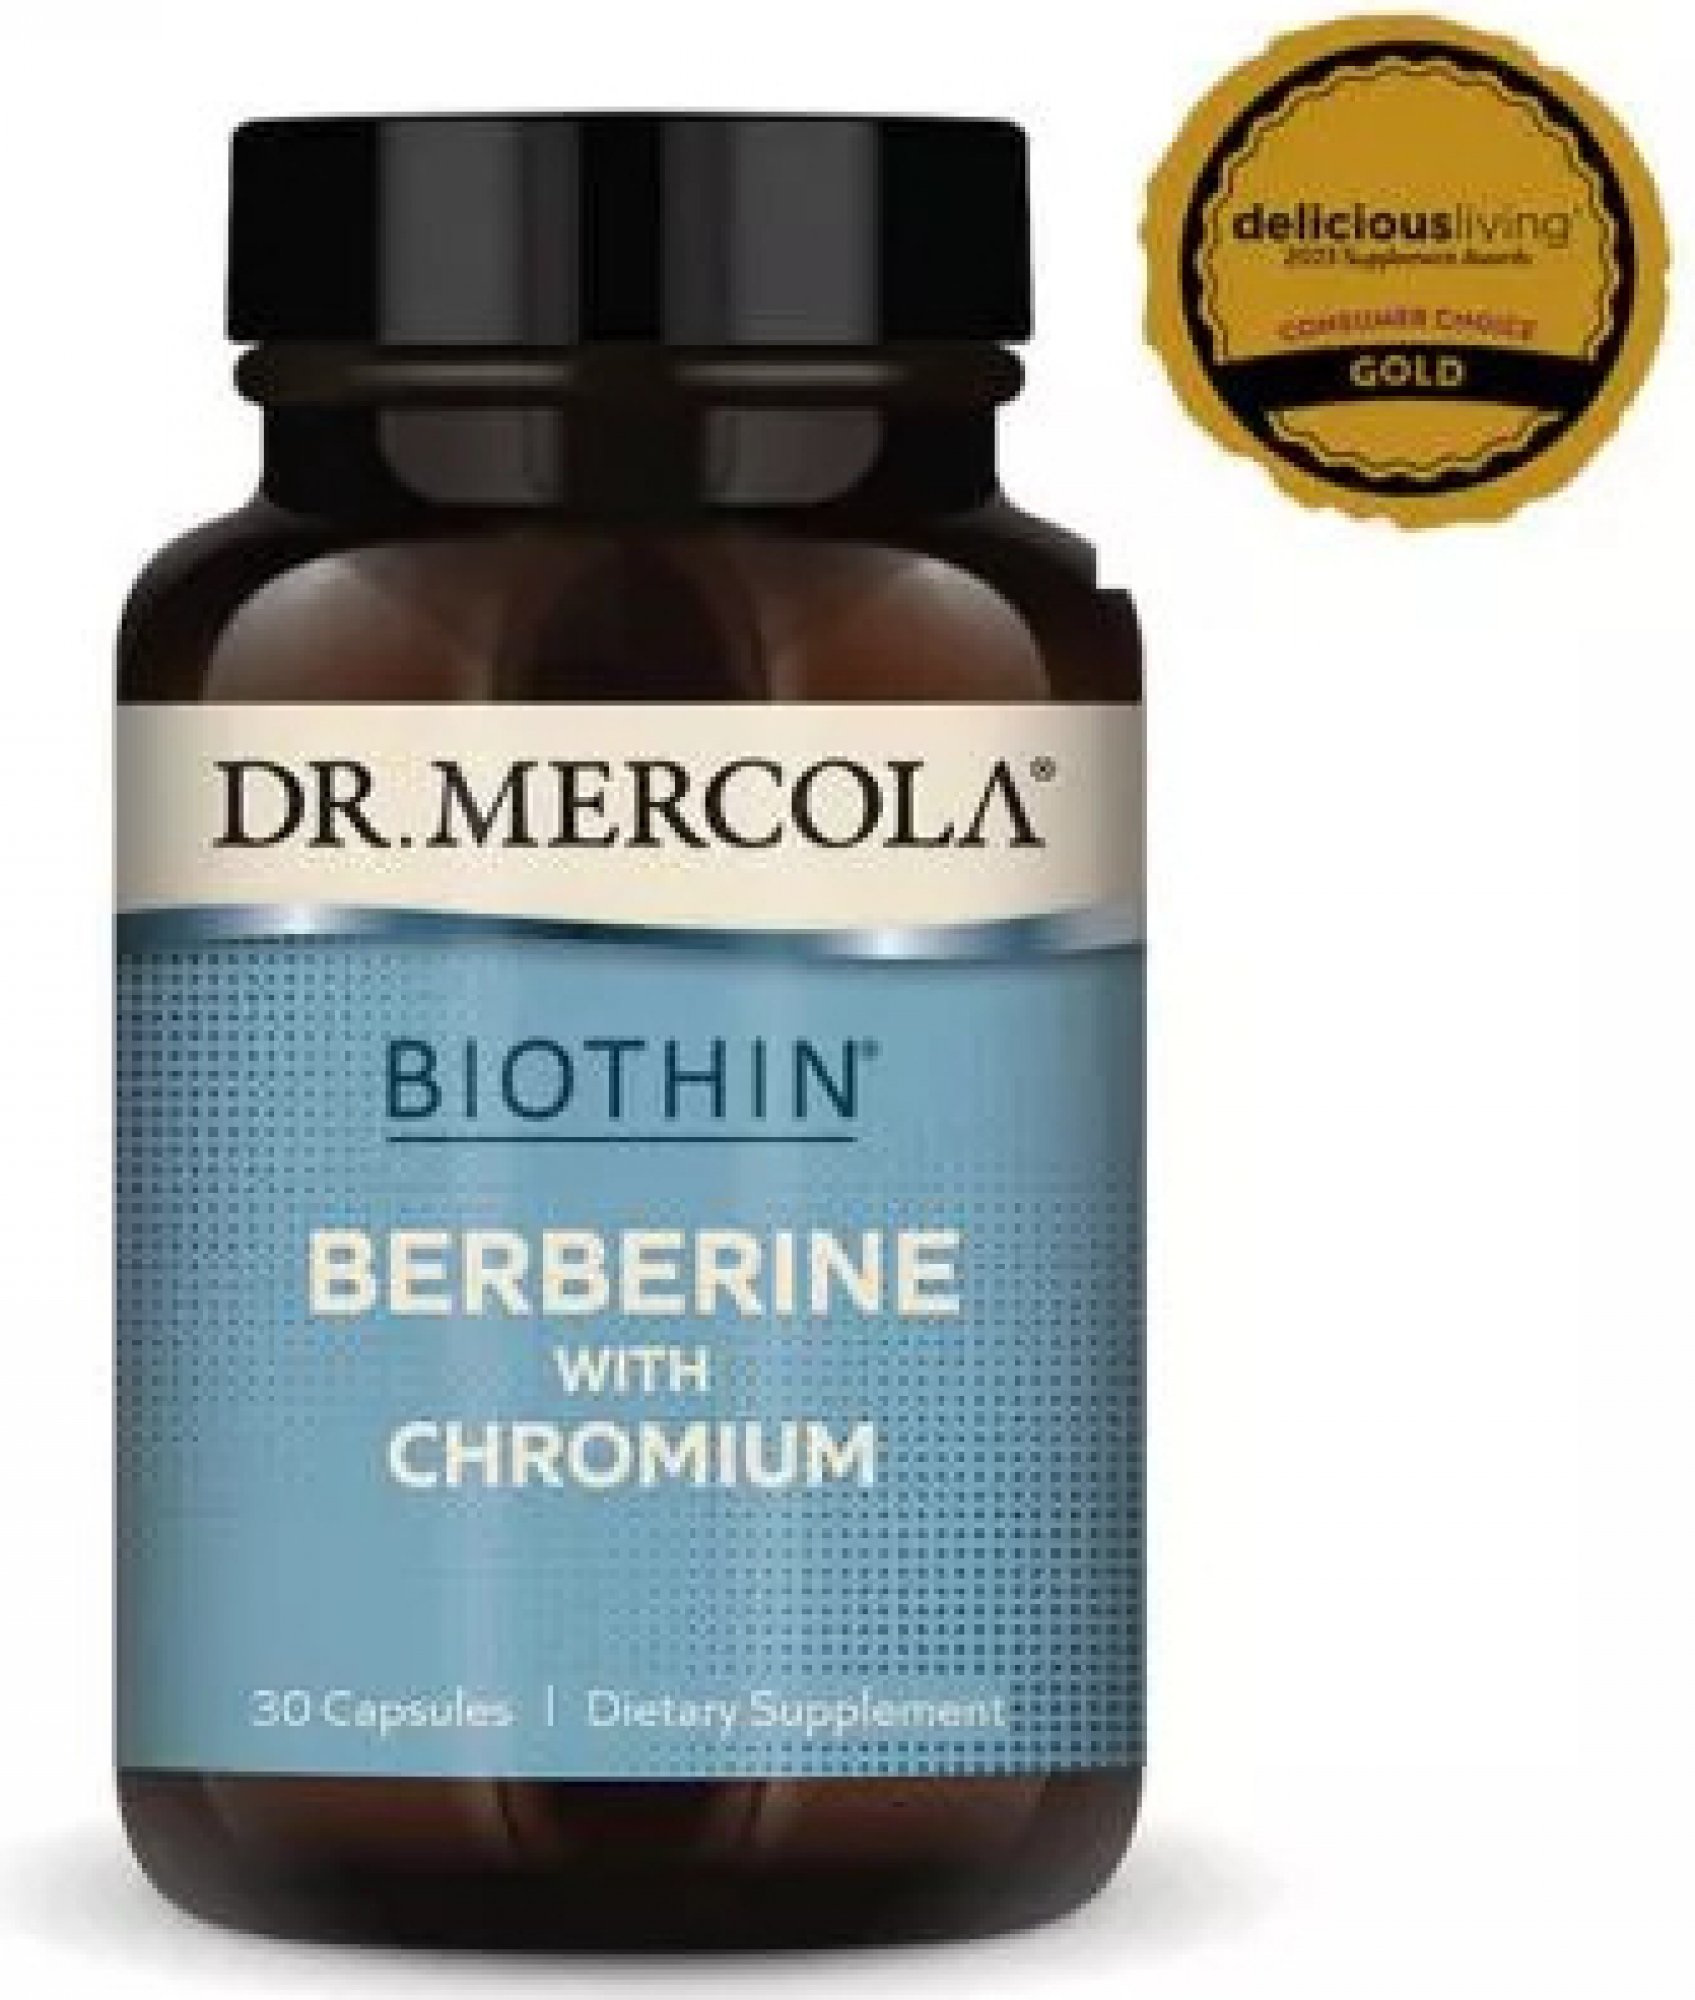 Dr. Mercola Biothin Berberine s Chrómem, 30 kapslí